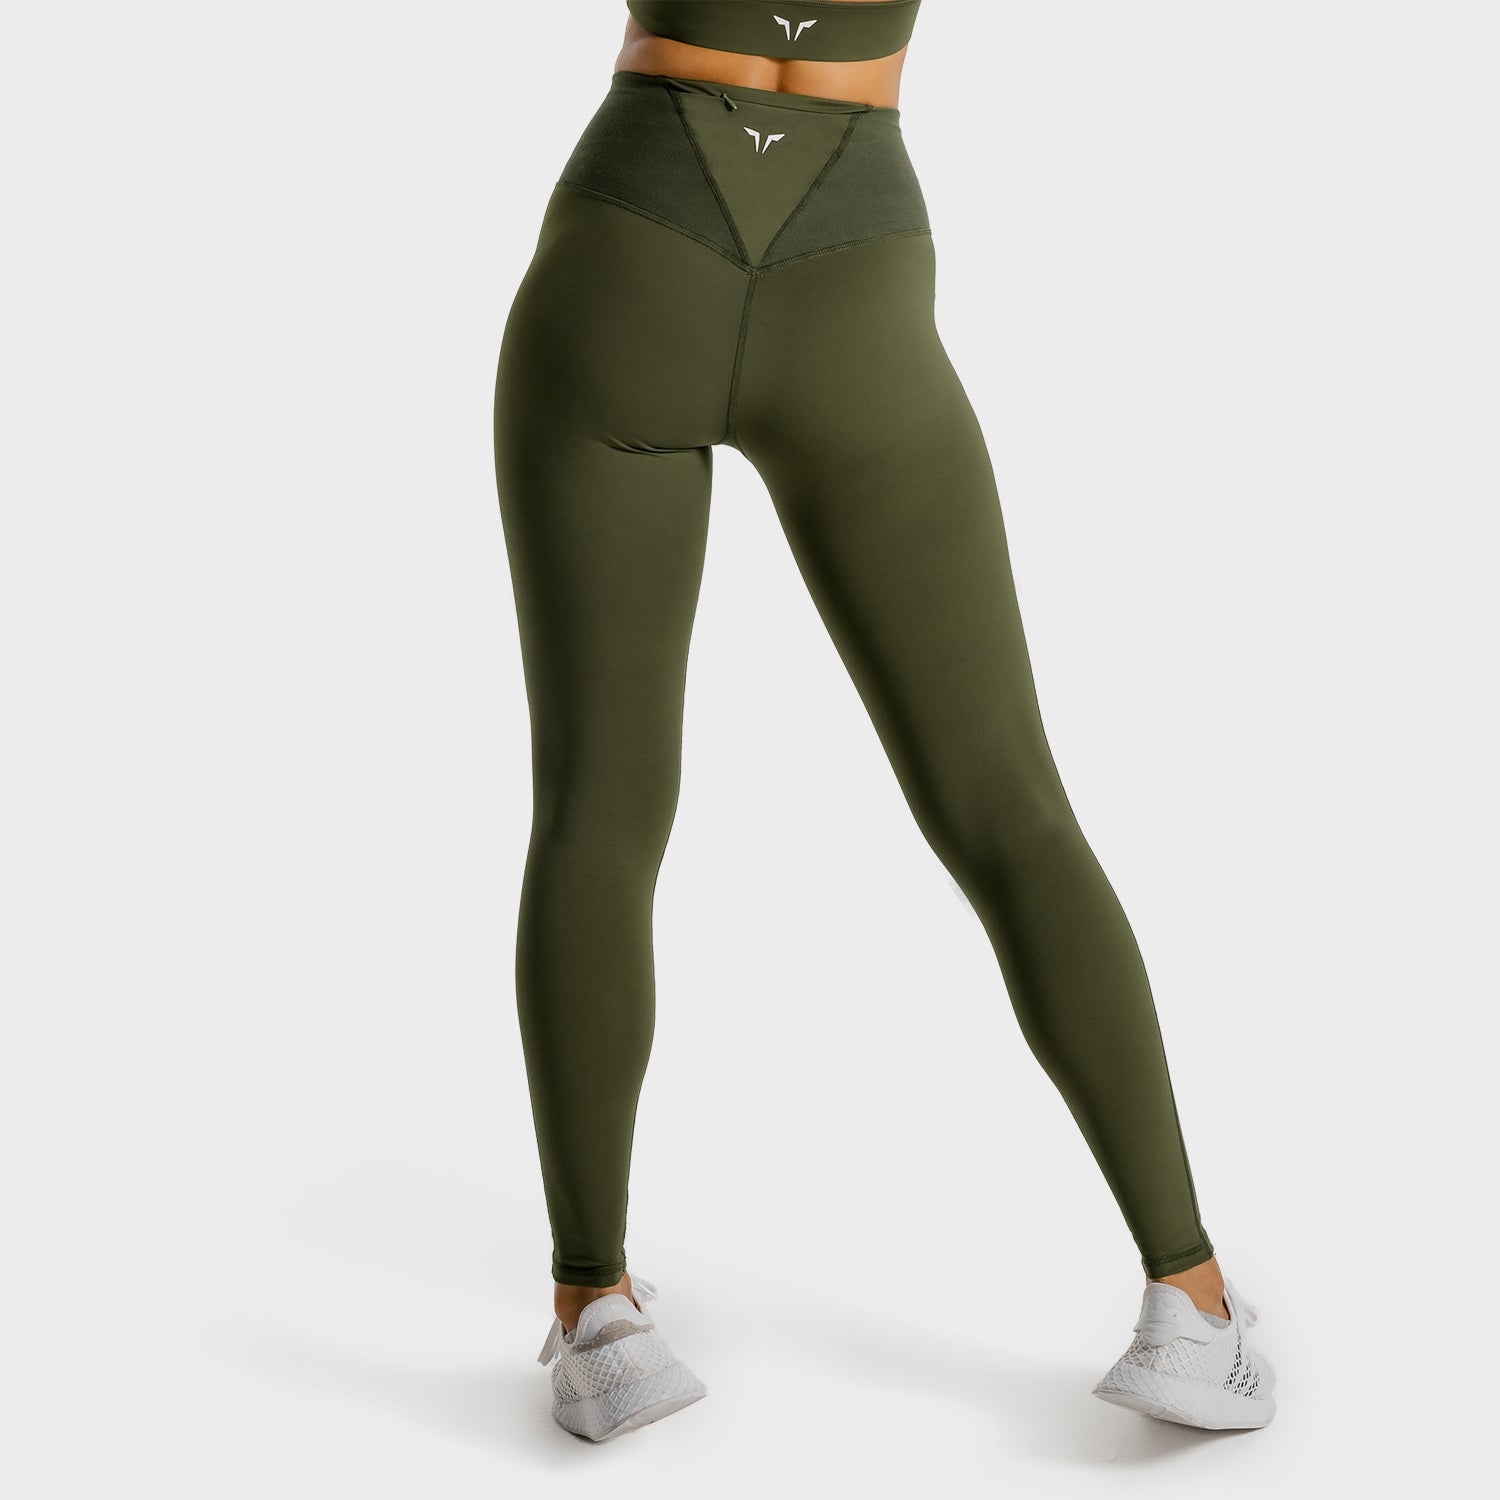 squatwolf-workout-clothes-core-leggings-khaki-gym-leggings-for-women